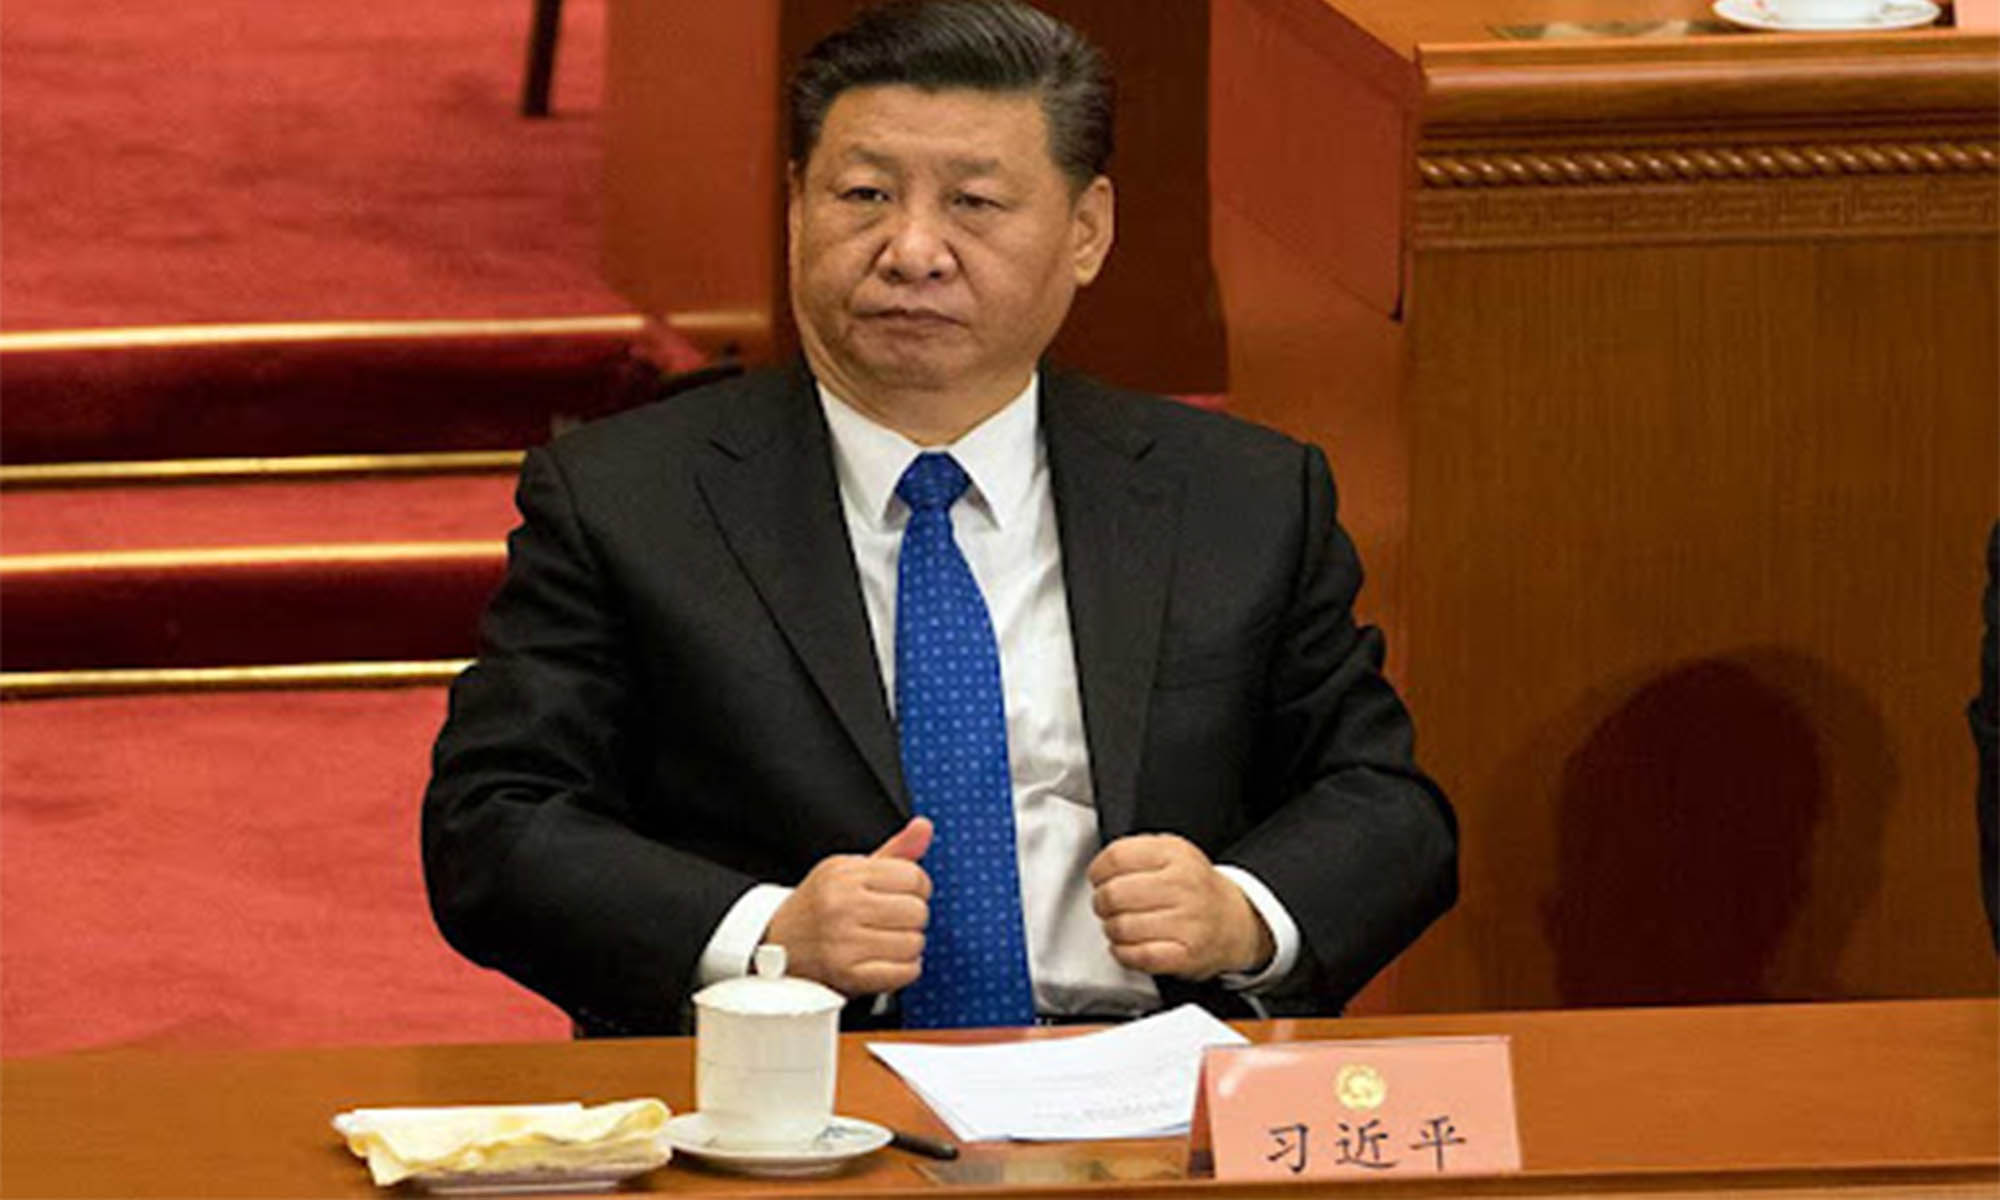 Finalmente, Xi Jinping, presidente de la República Popular China, ha respondido a Europa.